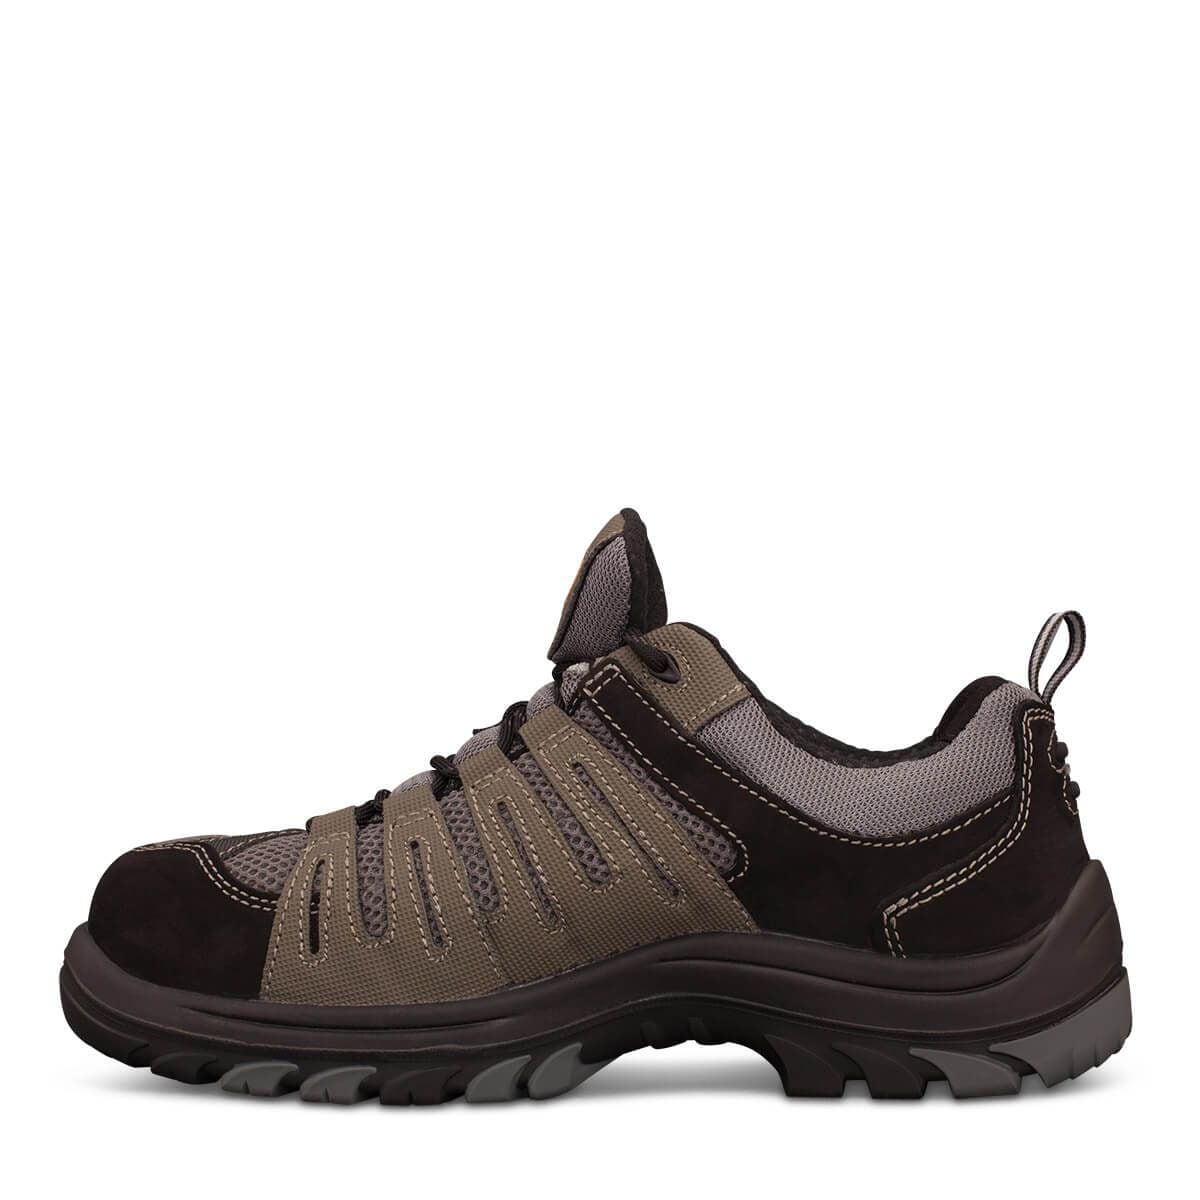 Oliver Mens 44-515 lu Sports Shoes Comp tpu Grey/Black 8